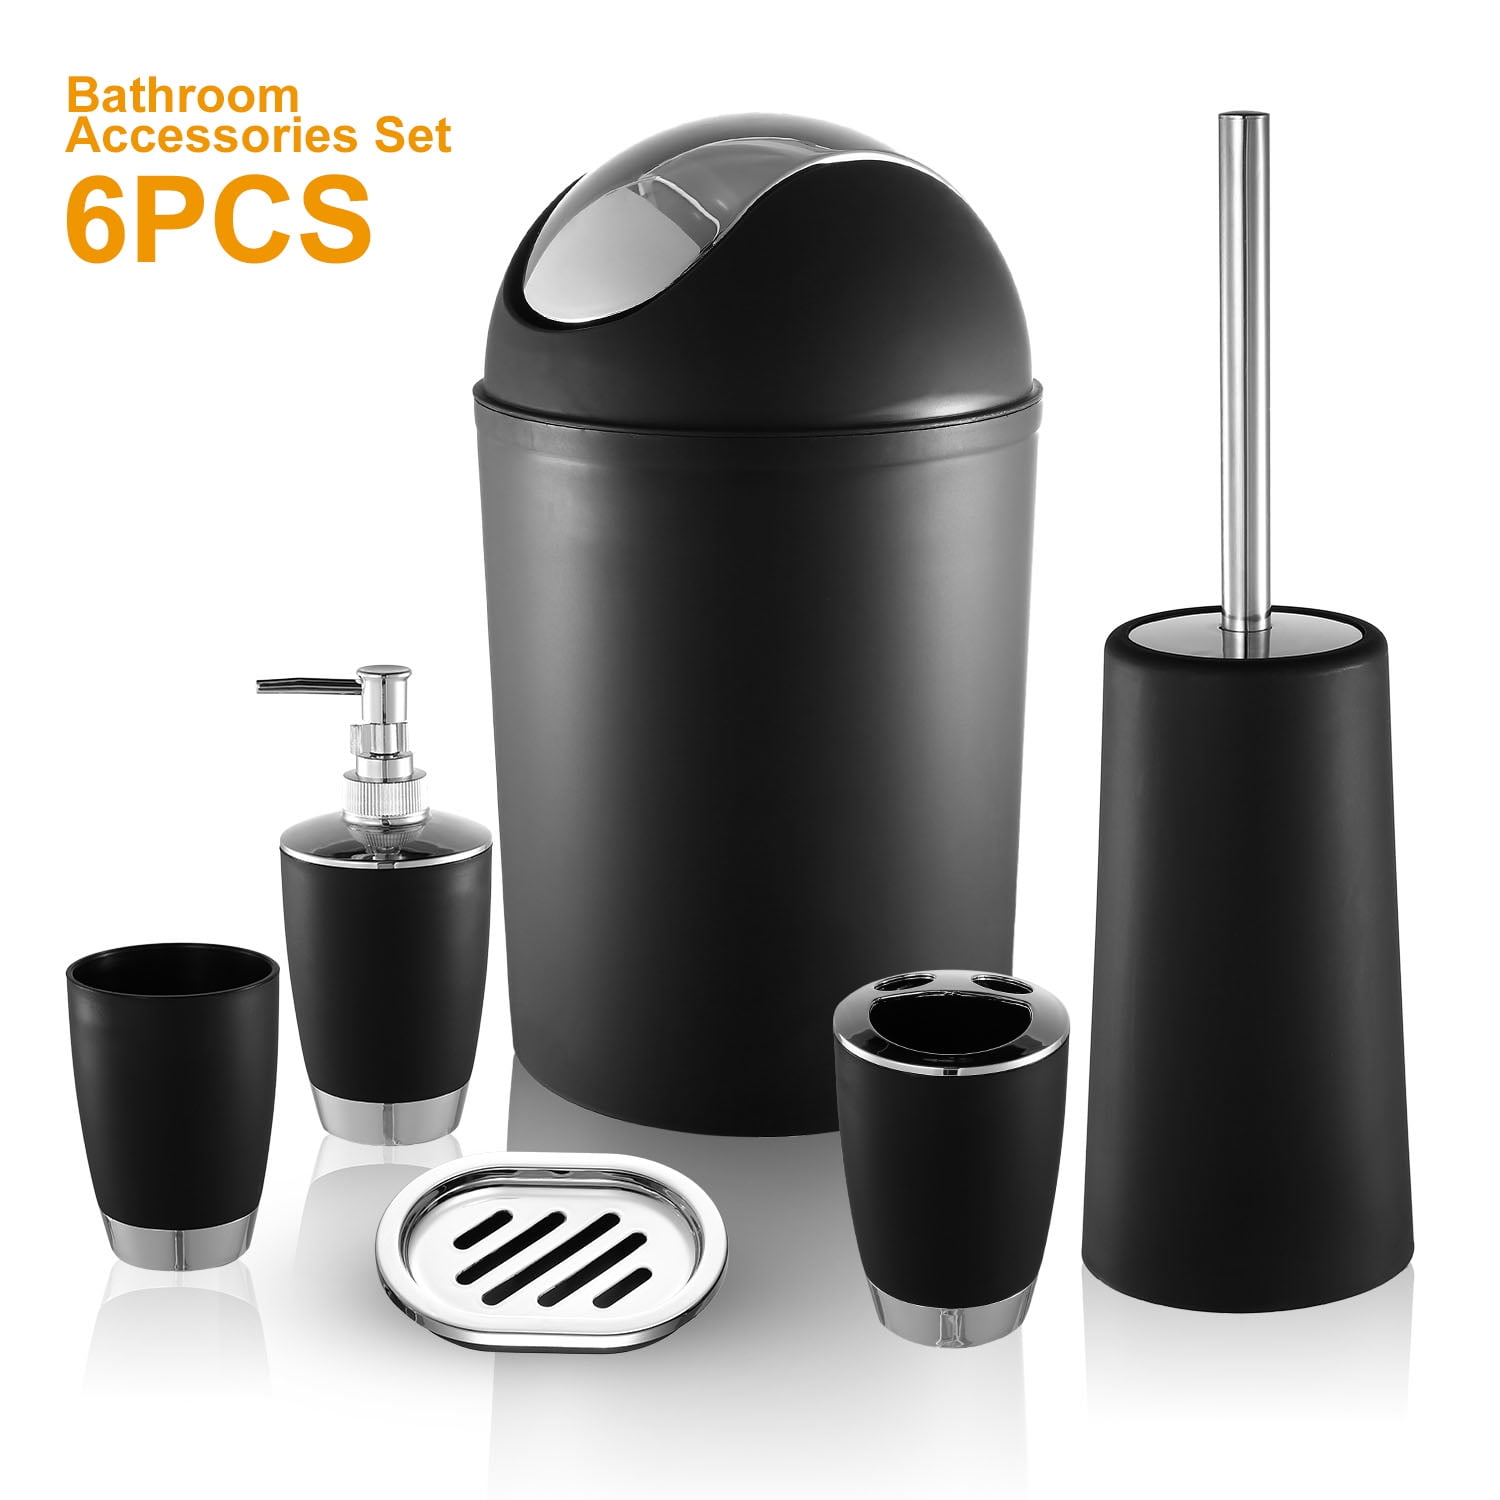 6 PCS Bathroom Set Include Soap Dish and Newthinking Bathroom Accessories Set 